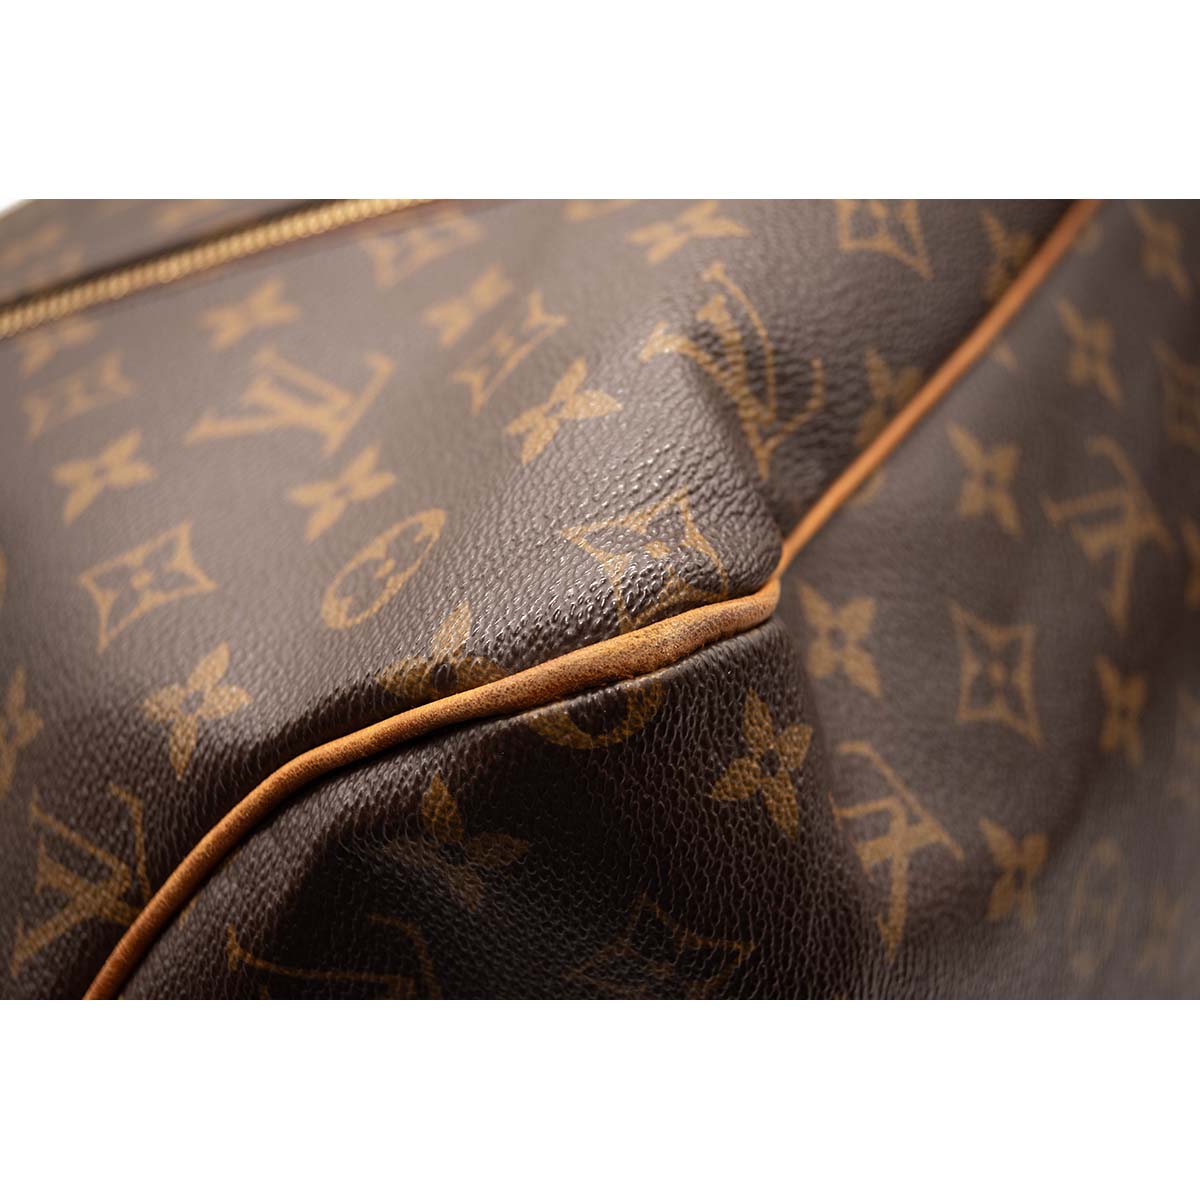 Louis Vuitton Delightful GM Tote Monogram Canvas Shoulder Bag